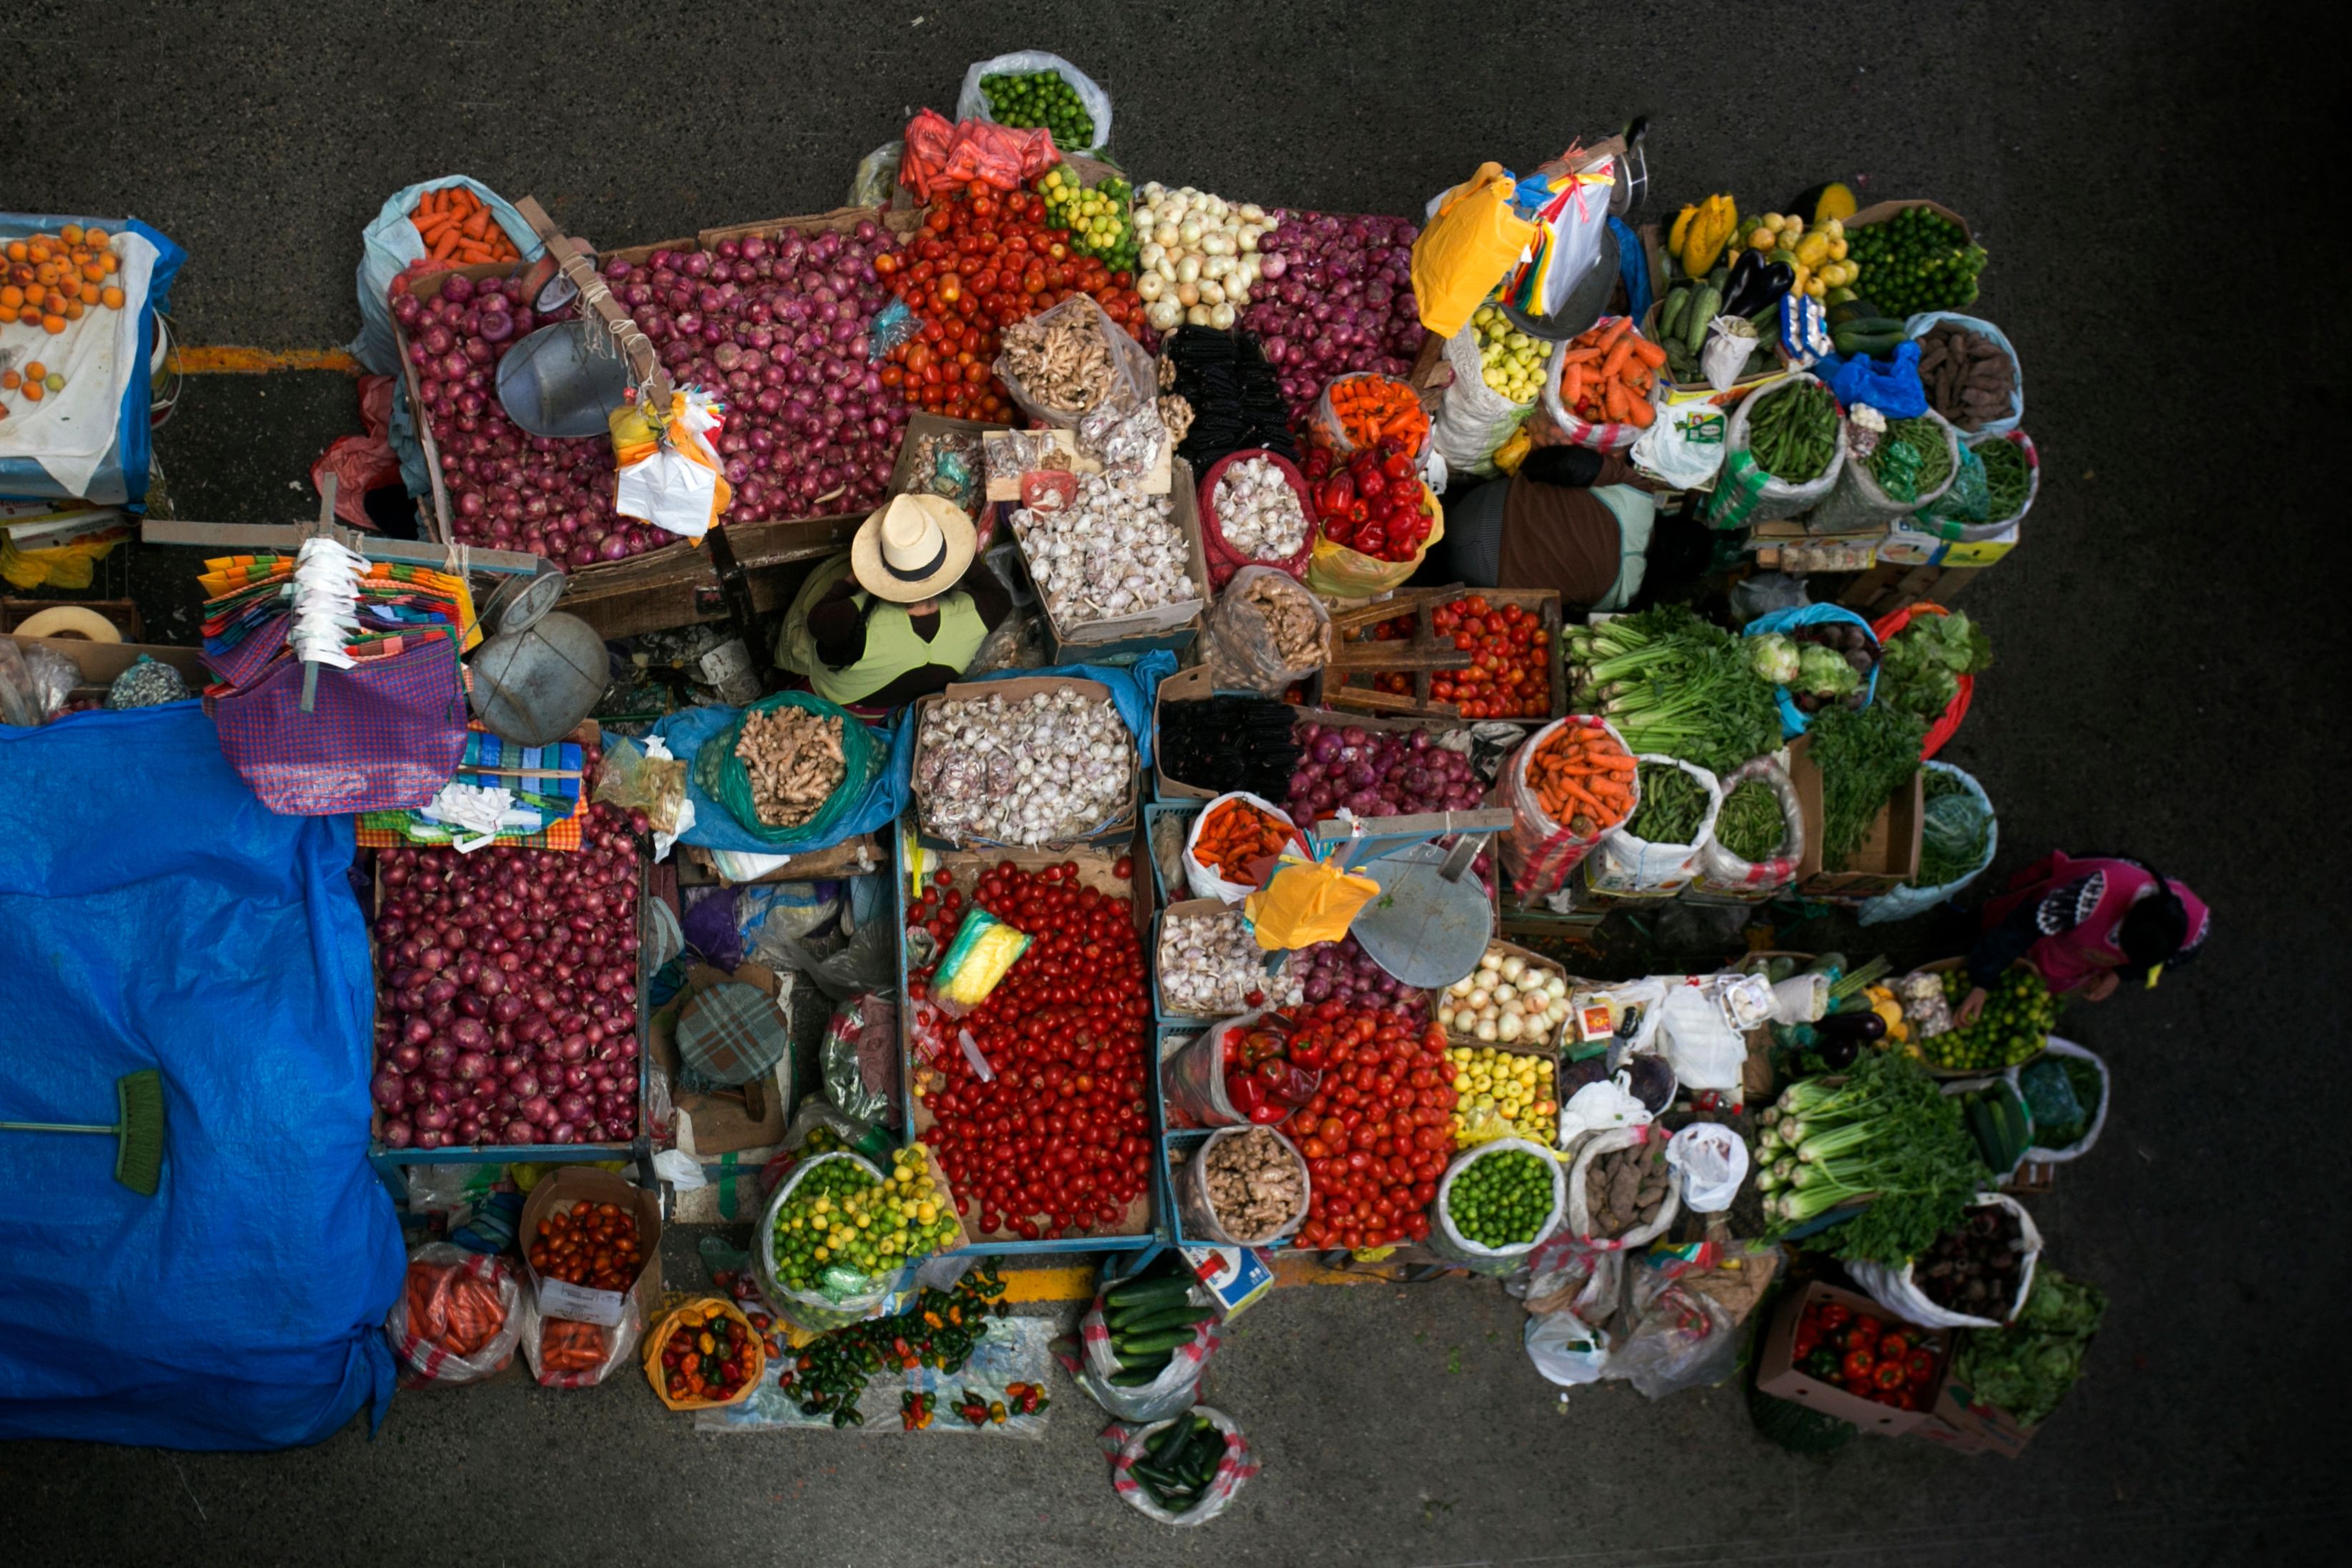 Bird's eye view of vegetable vendors at a market in Urubamba, Peru.